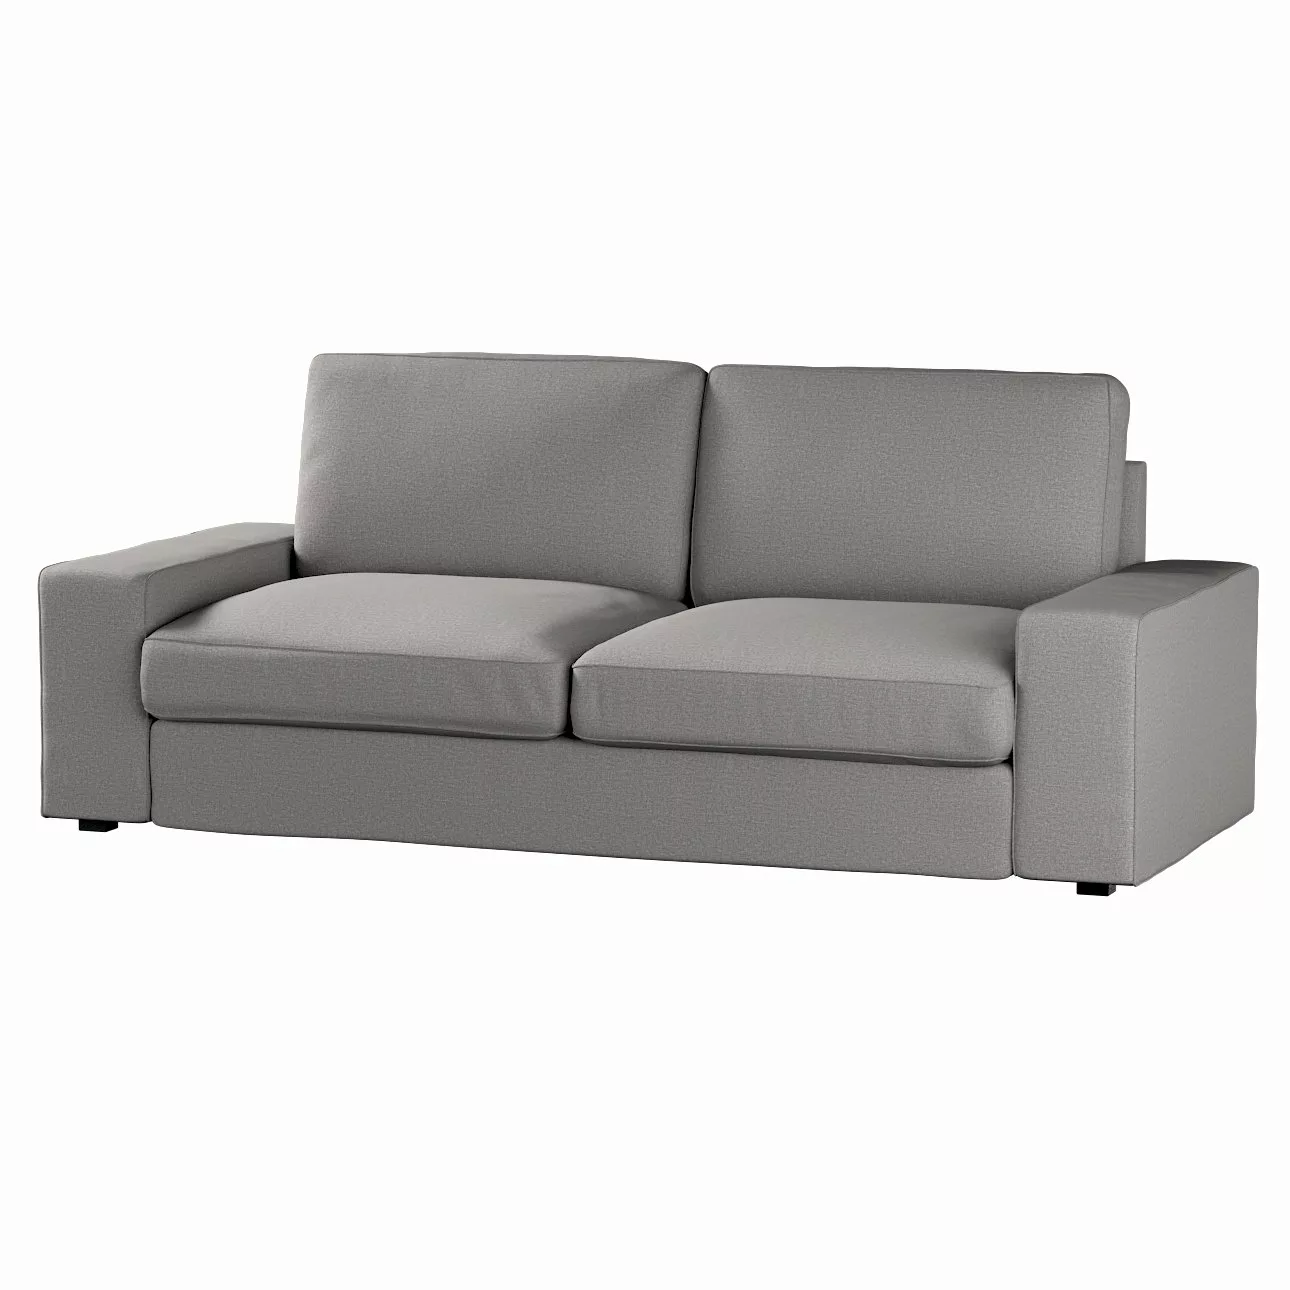 Bezug für Kivik 3-Sitzer Sofa, grau, Bezug für Sofa Kivik 3-Sitzer, Edinbur günstig online kaufen